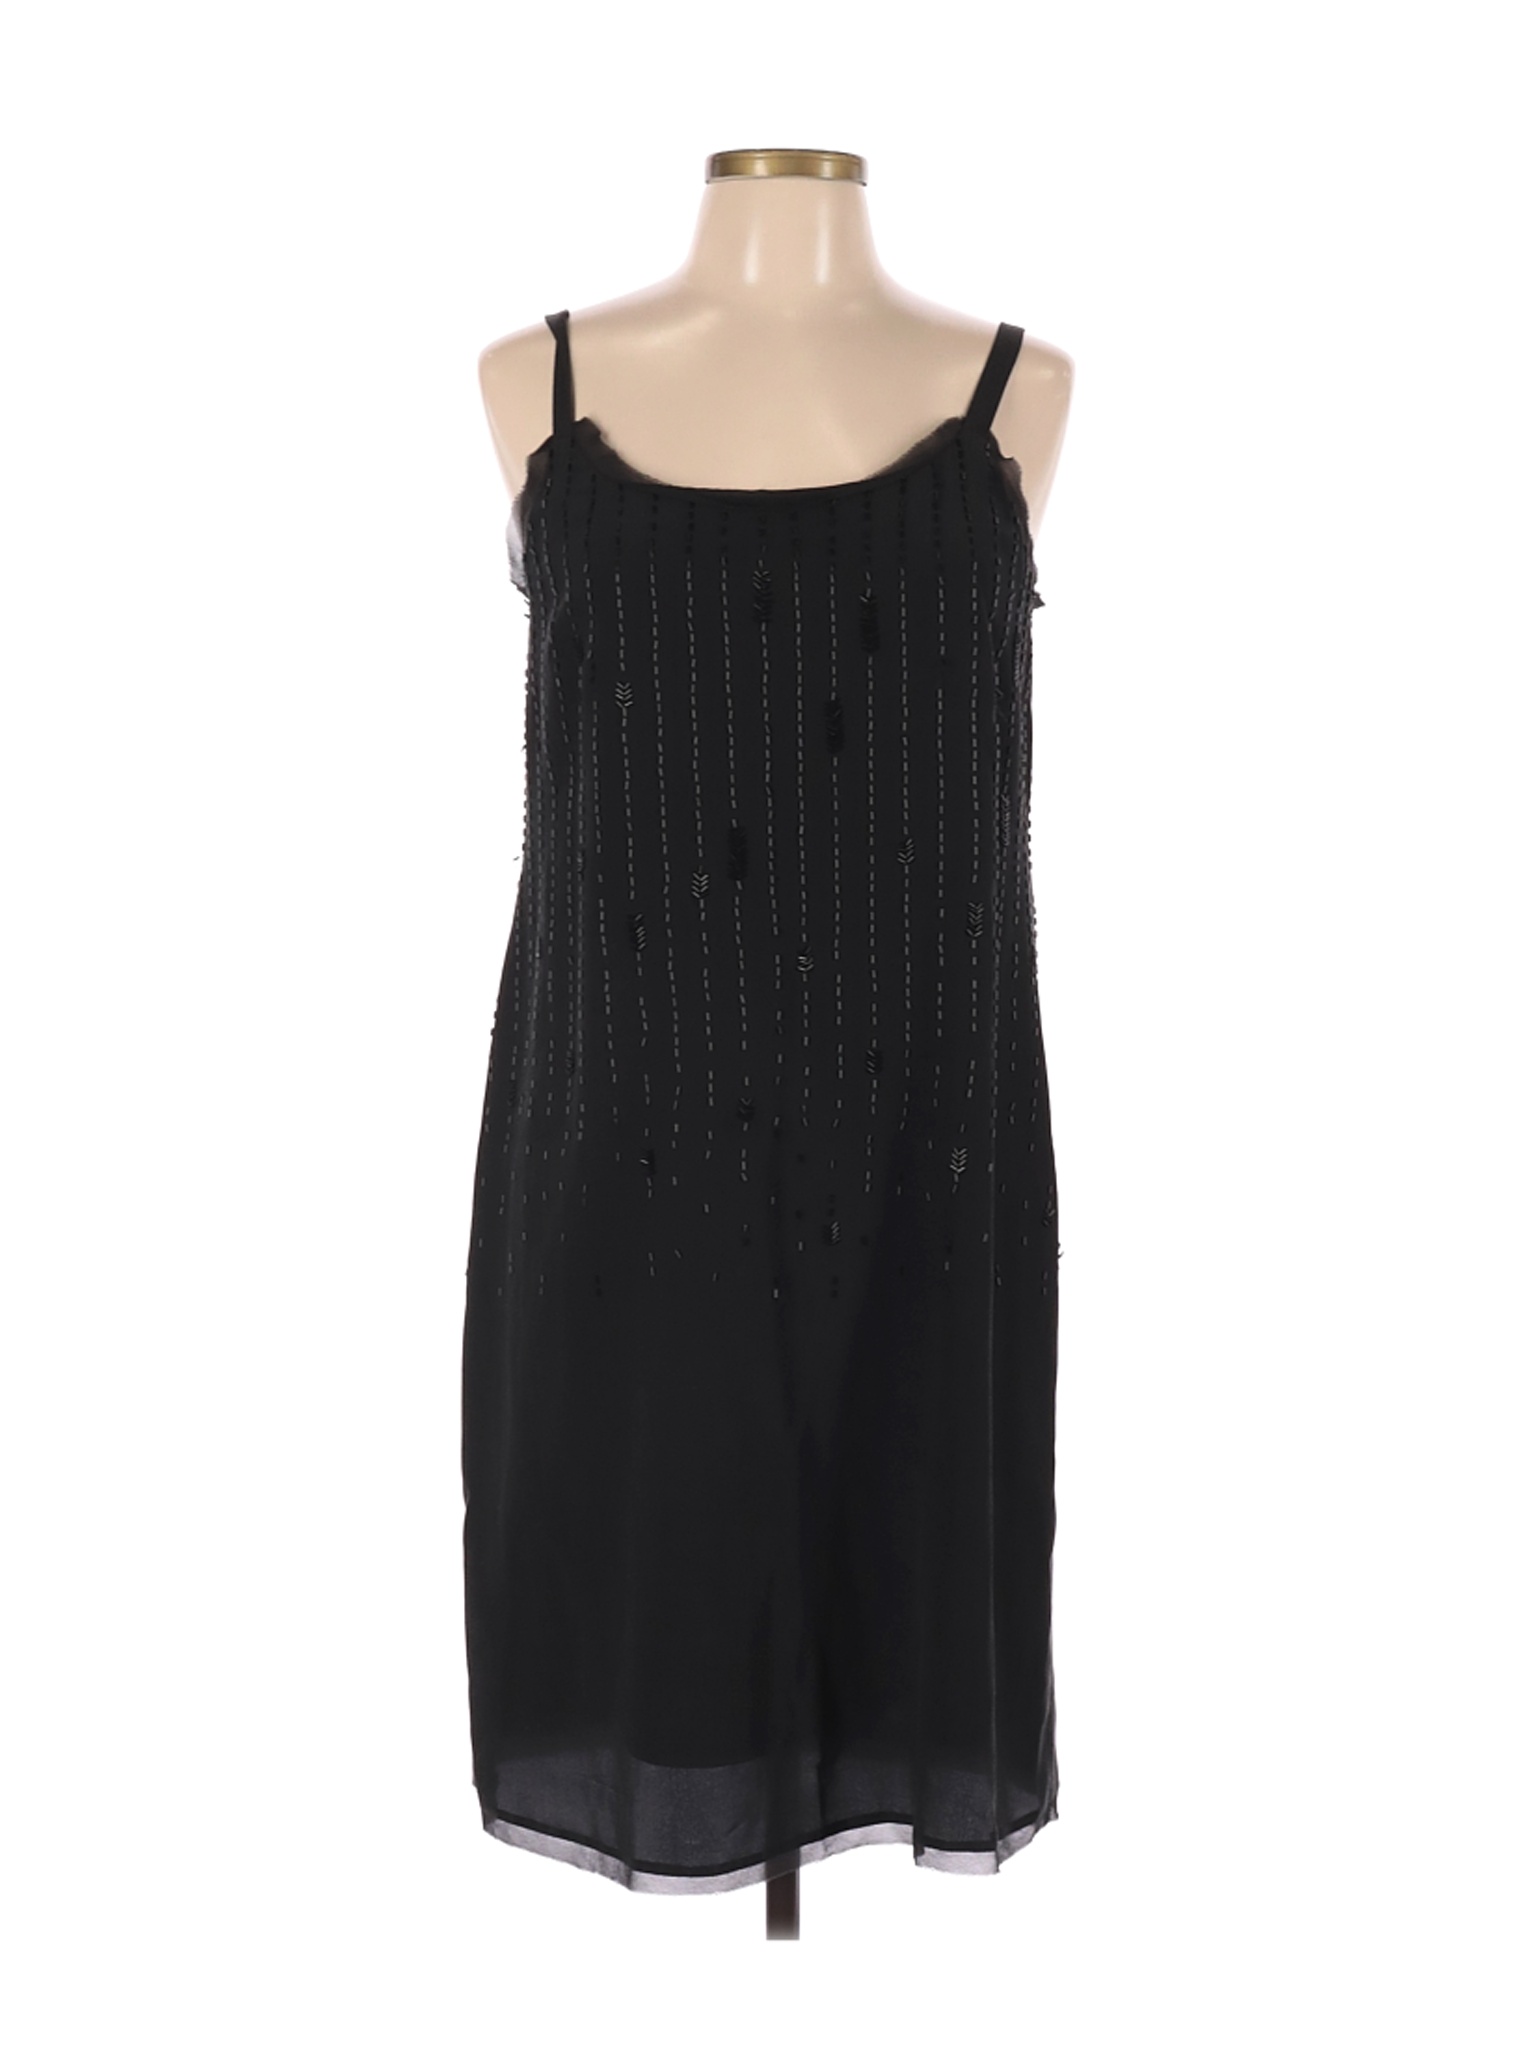 NWT Eileen Fisher Women Black Cocktail Dress 8 | eBay